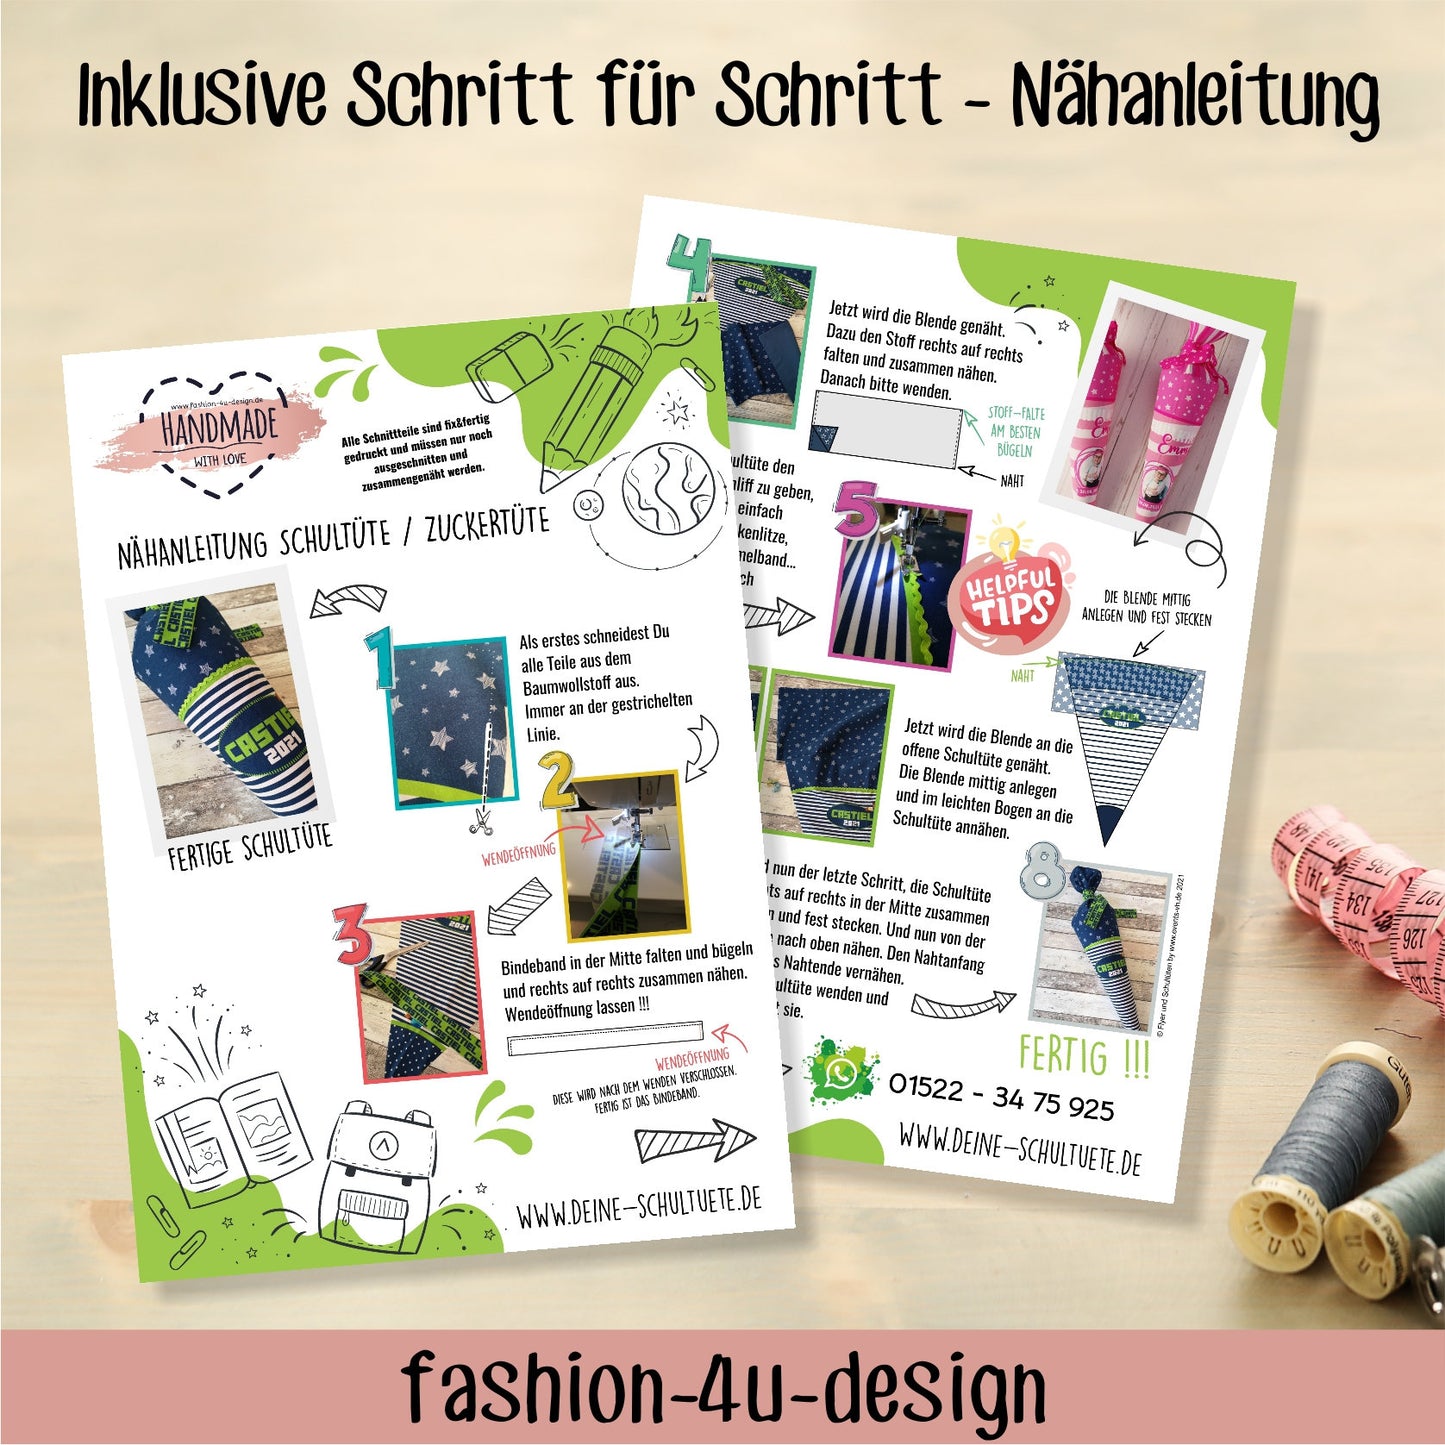 205 Schultüte/Zuckertüte: Meerjungfrau mit Rosa Schuppen - Baumwoll-Panel zum selber nähen oder fix&fertig genäht - DIY Näh-Set 70 cm